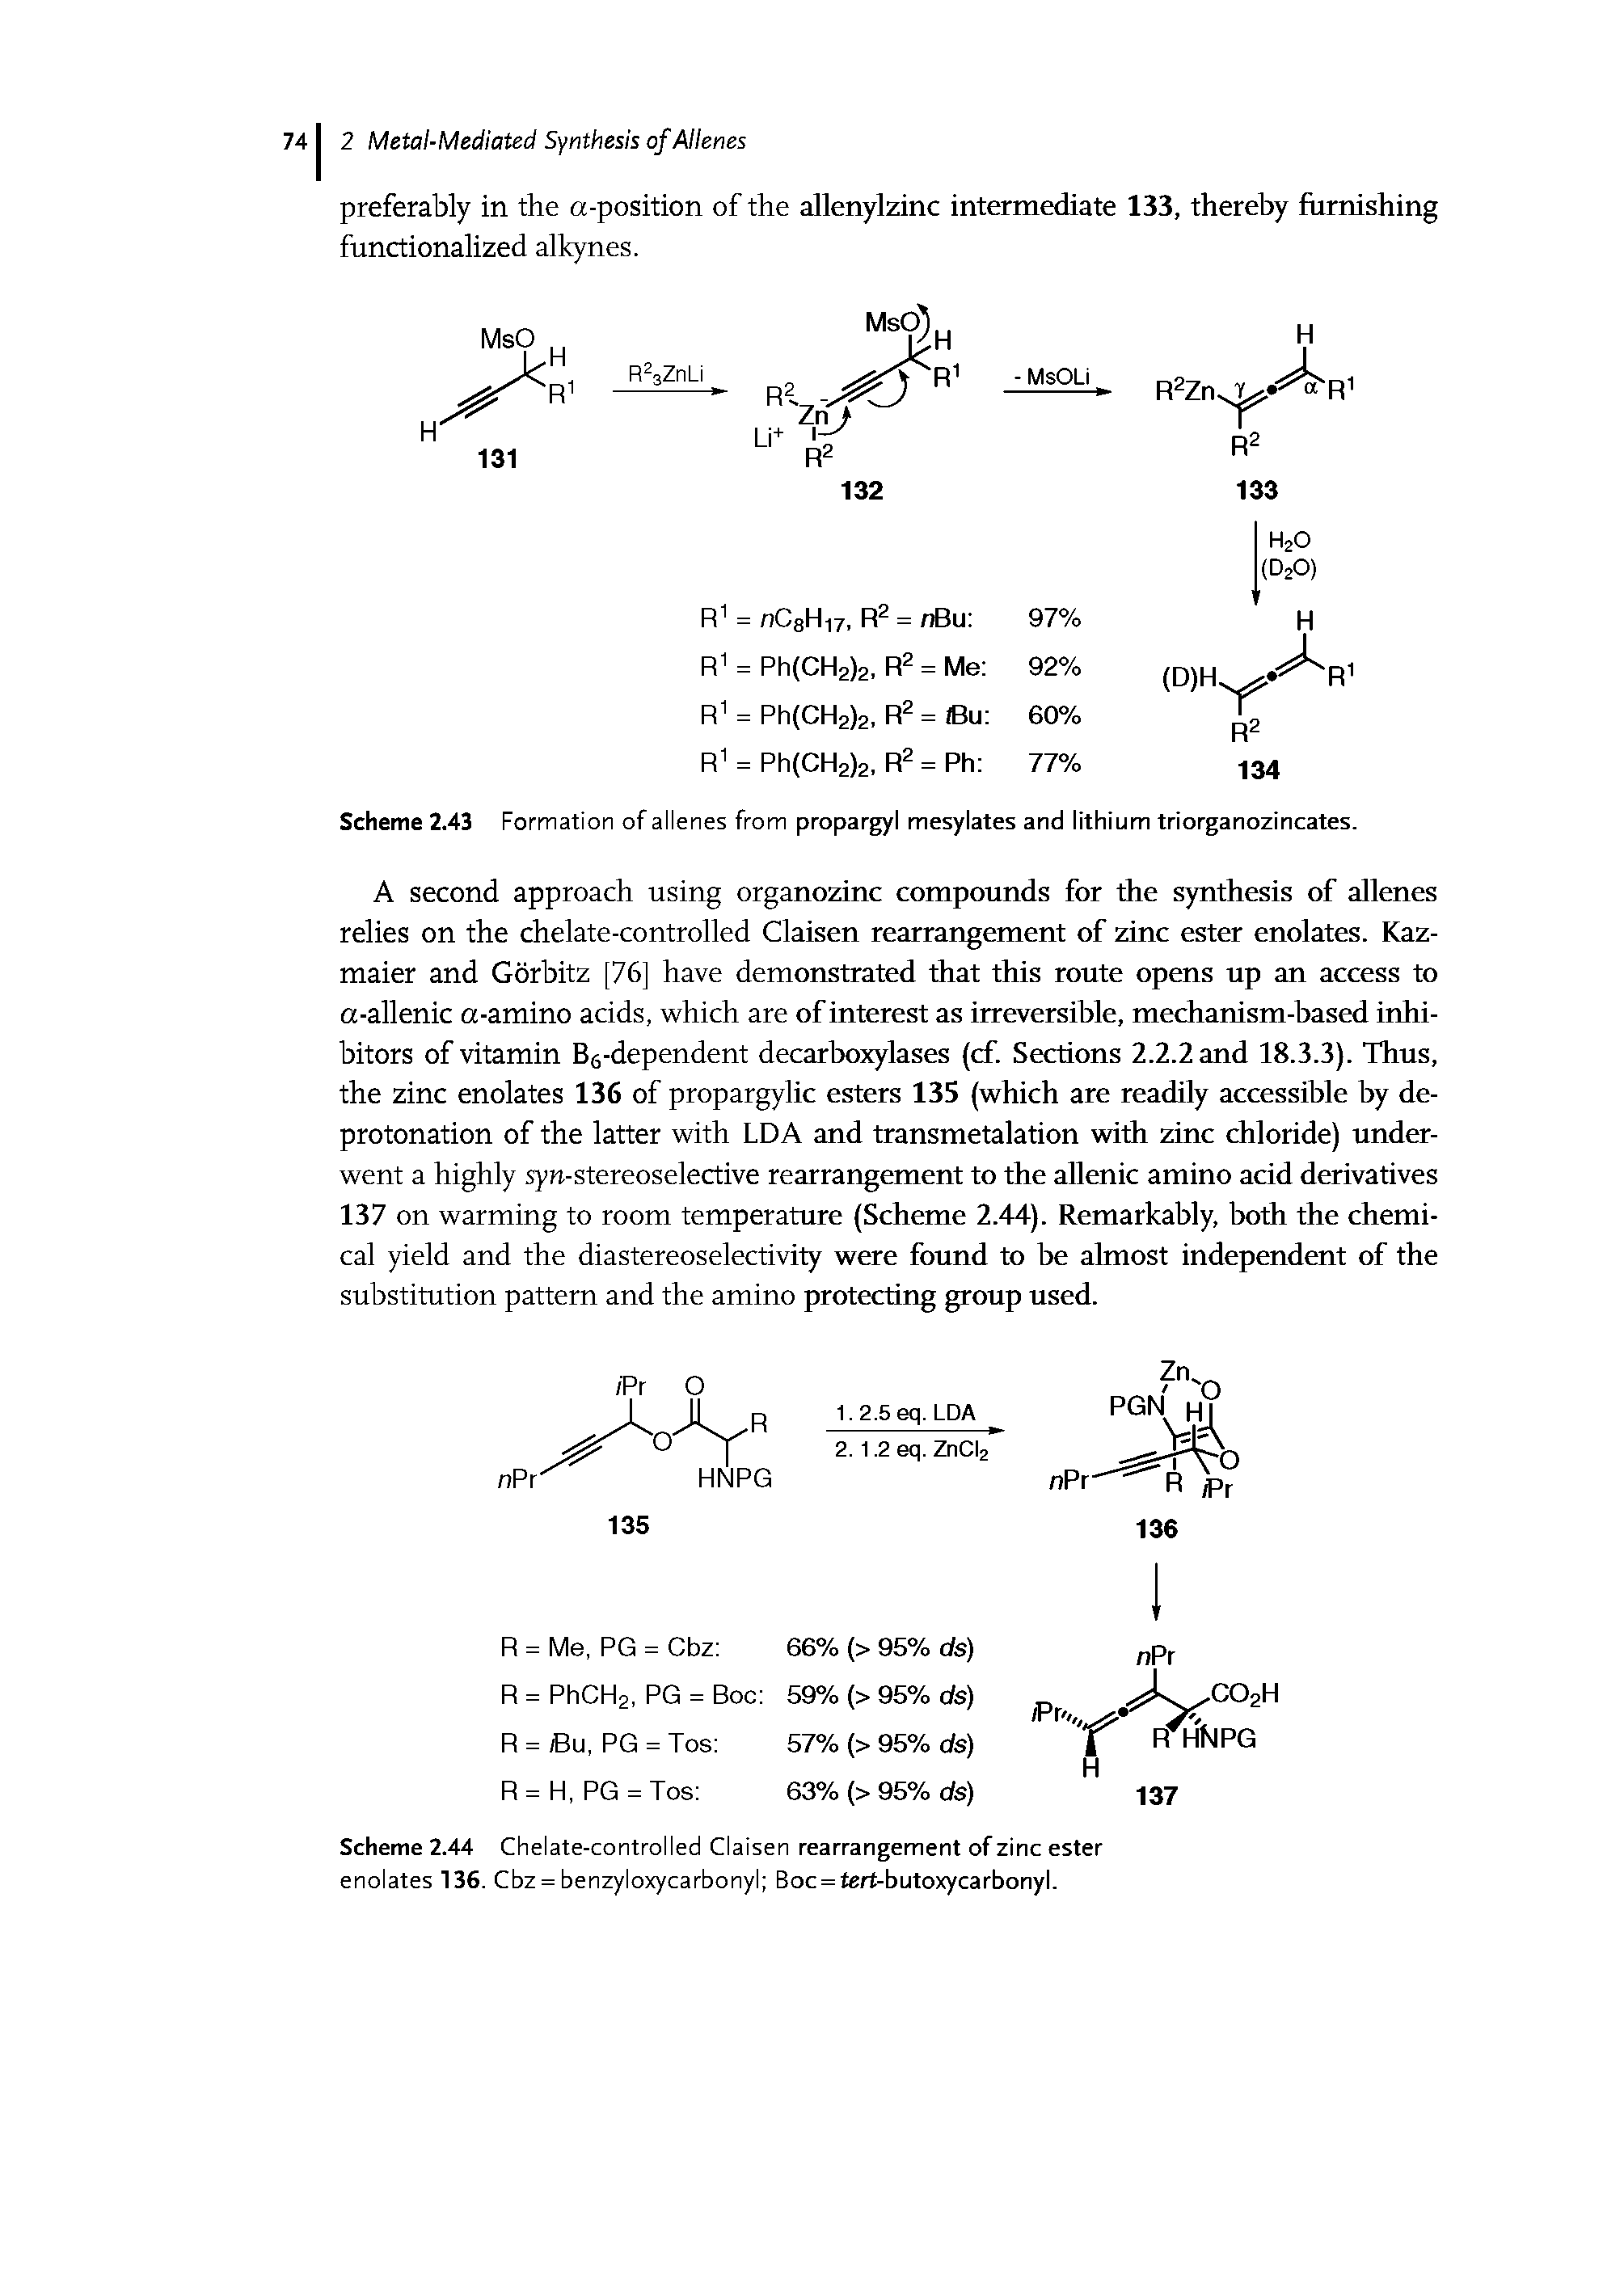 Scheme 2.44 Chelate-controlled Claisen rearrangement of zinc ester enolates 136. Cbz = benzyloxycarbonyl Boc = tert-butoxycarbonyl.